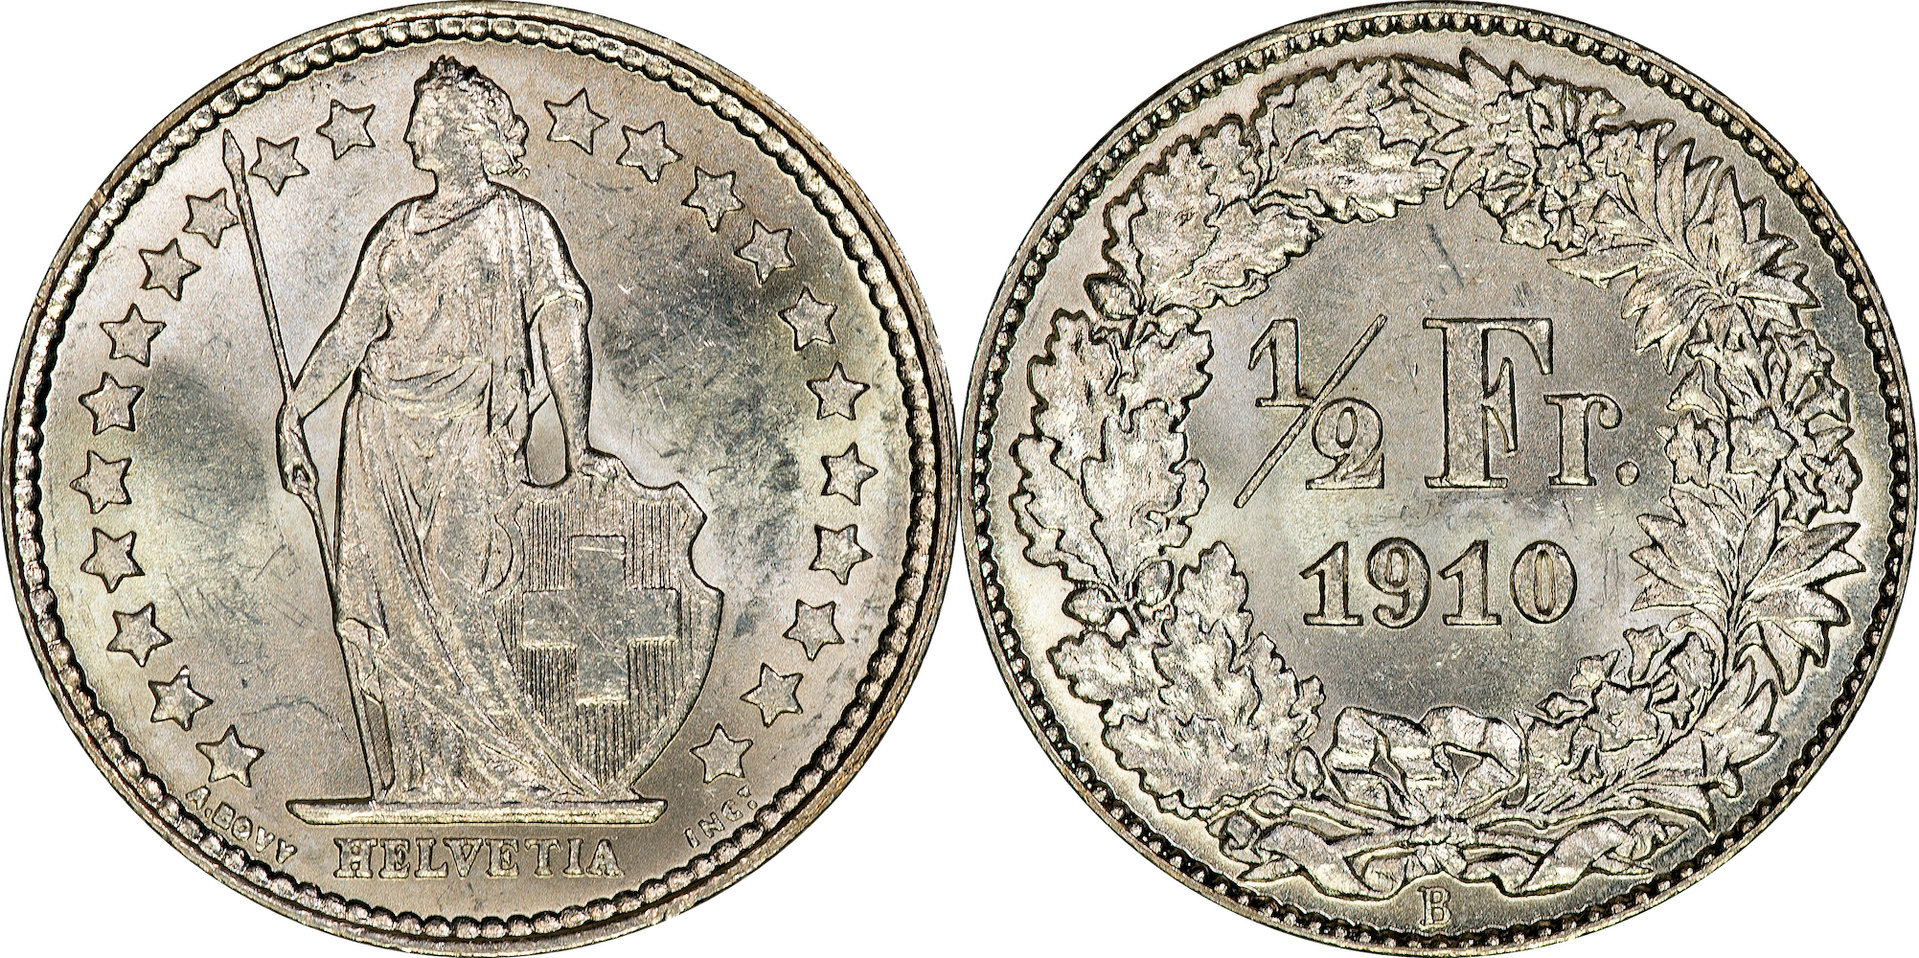 Switzerland - 1910 Half Franc.jpg